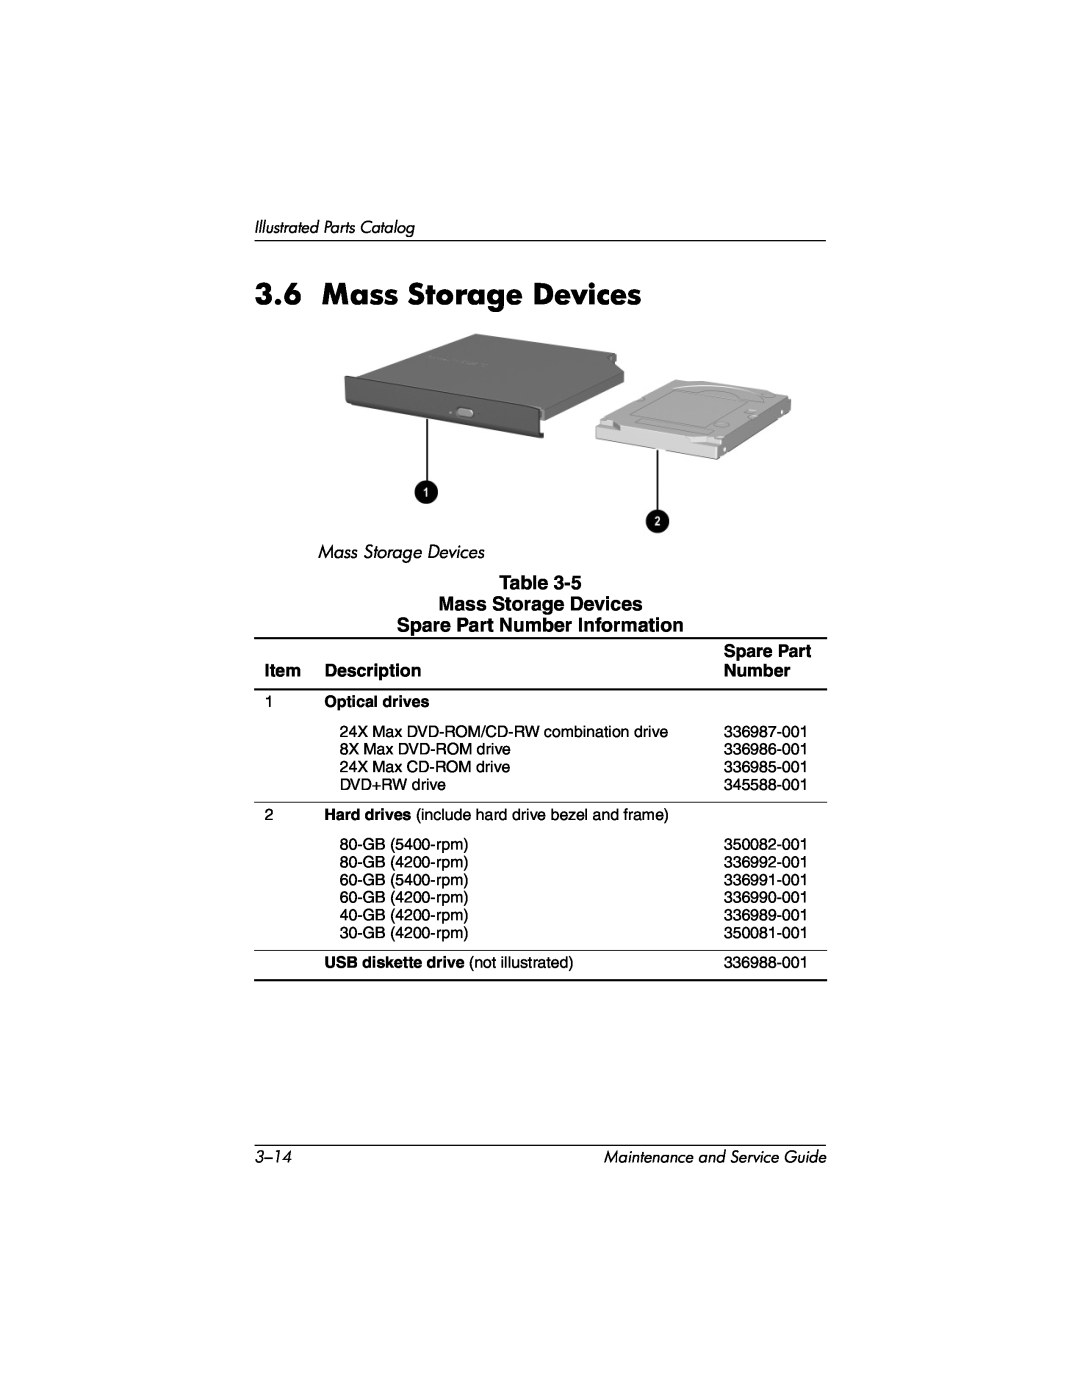 HP X1094AP Mass Storage Devices, Item Description, Number, Illustrated Parts Catalog, Spare Part, Optical drives, 3-14 